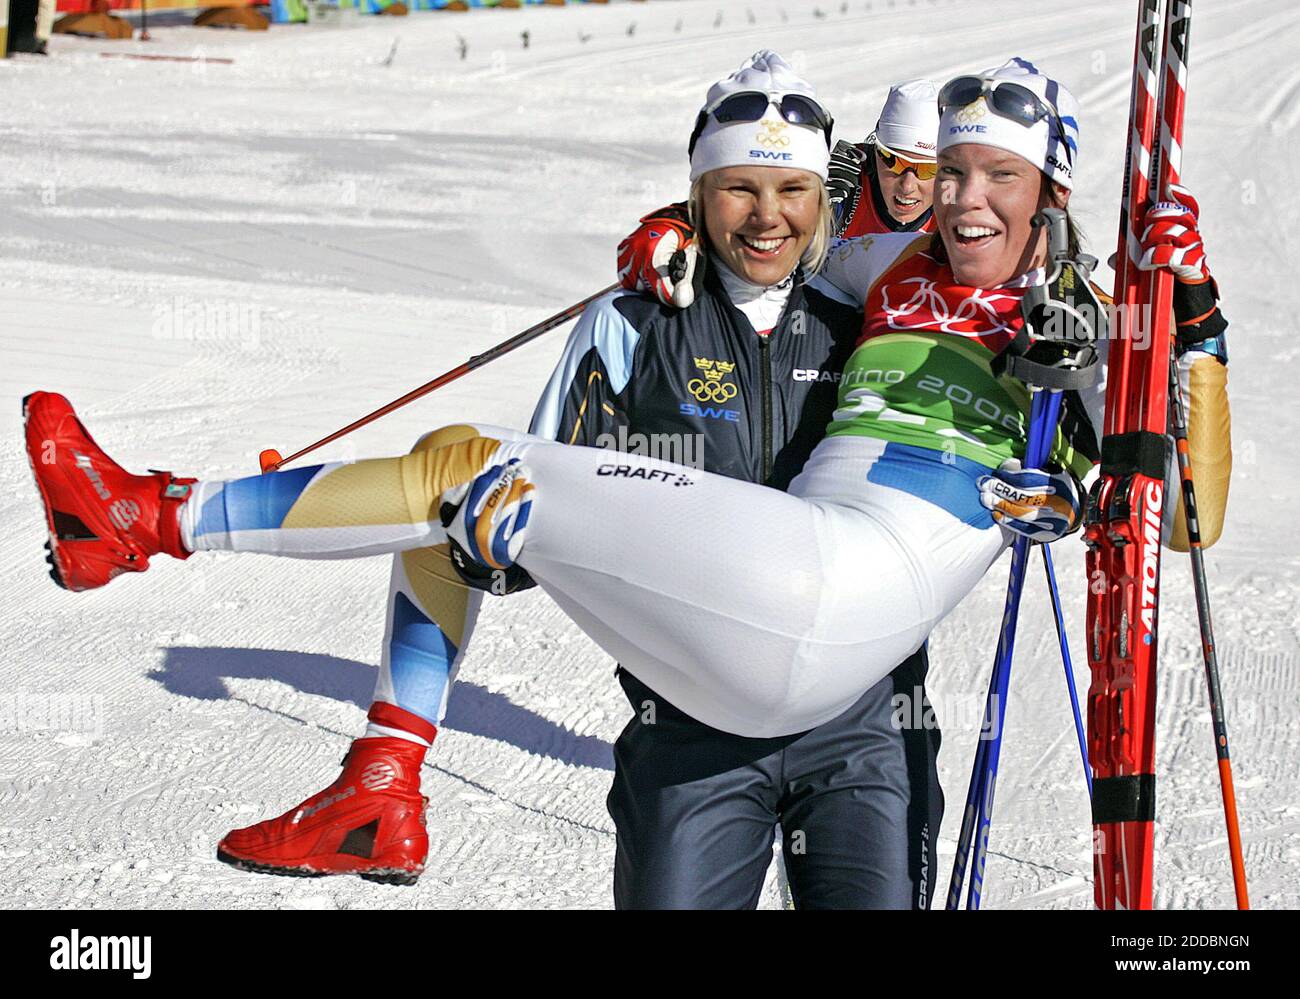 Swedish ski team hi-res stock photography and images - Alamy